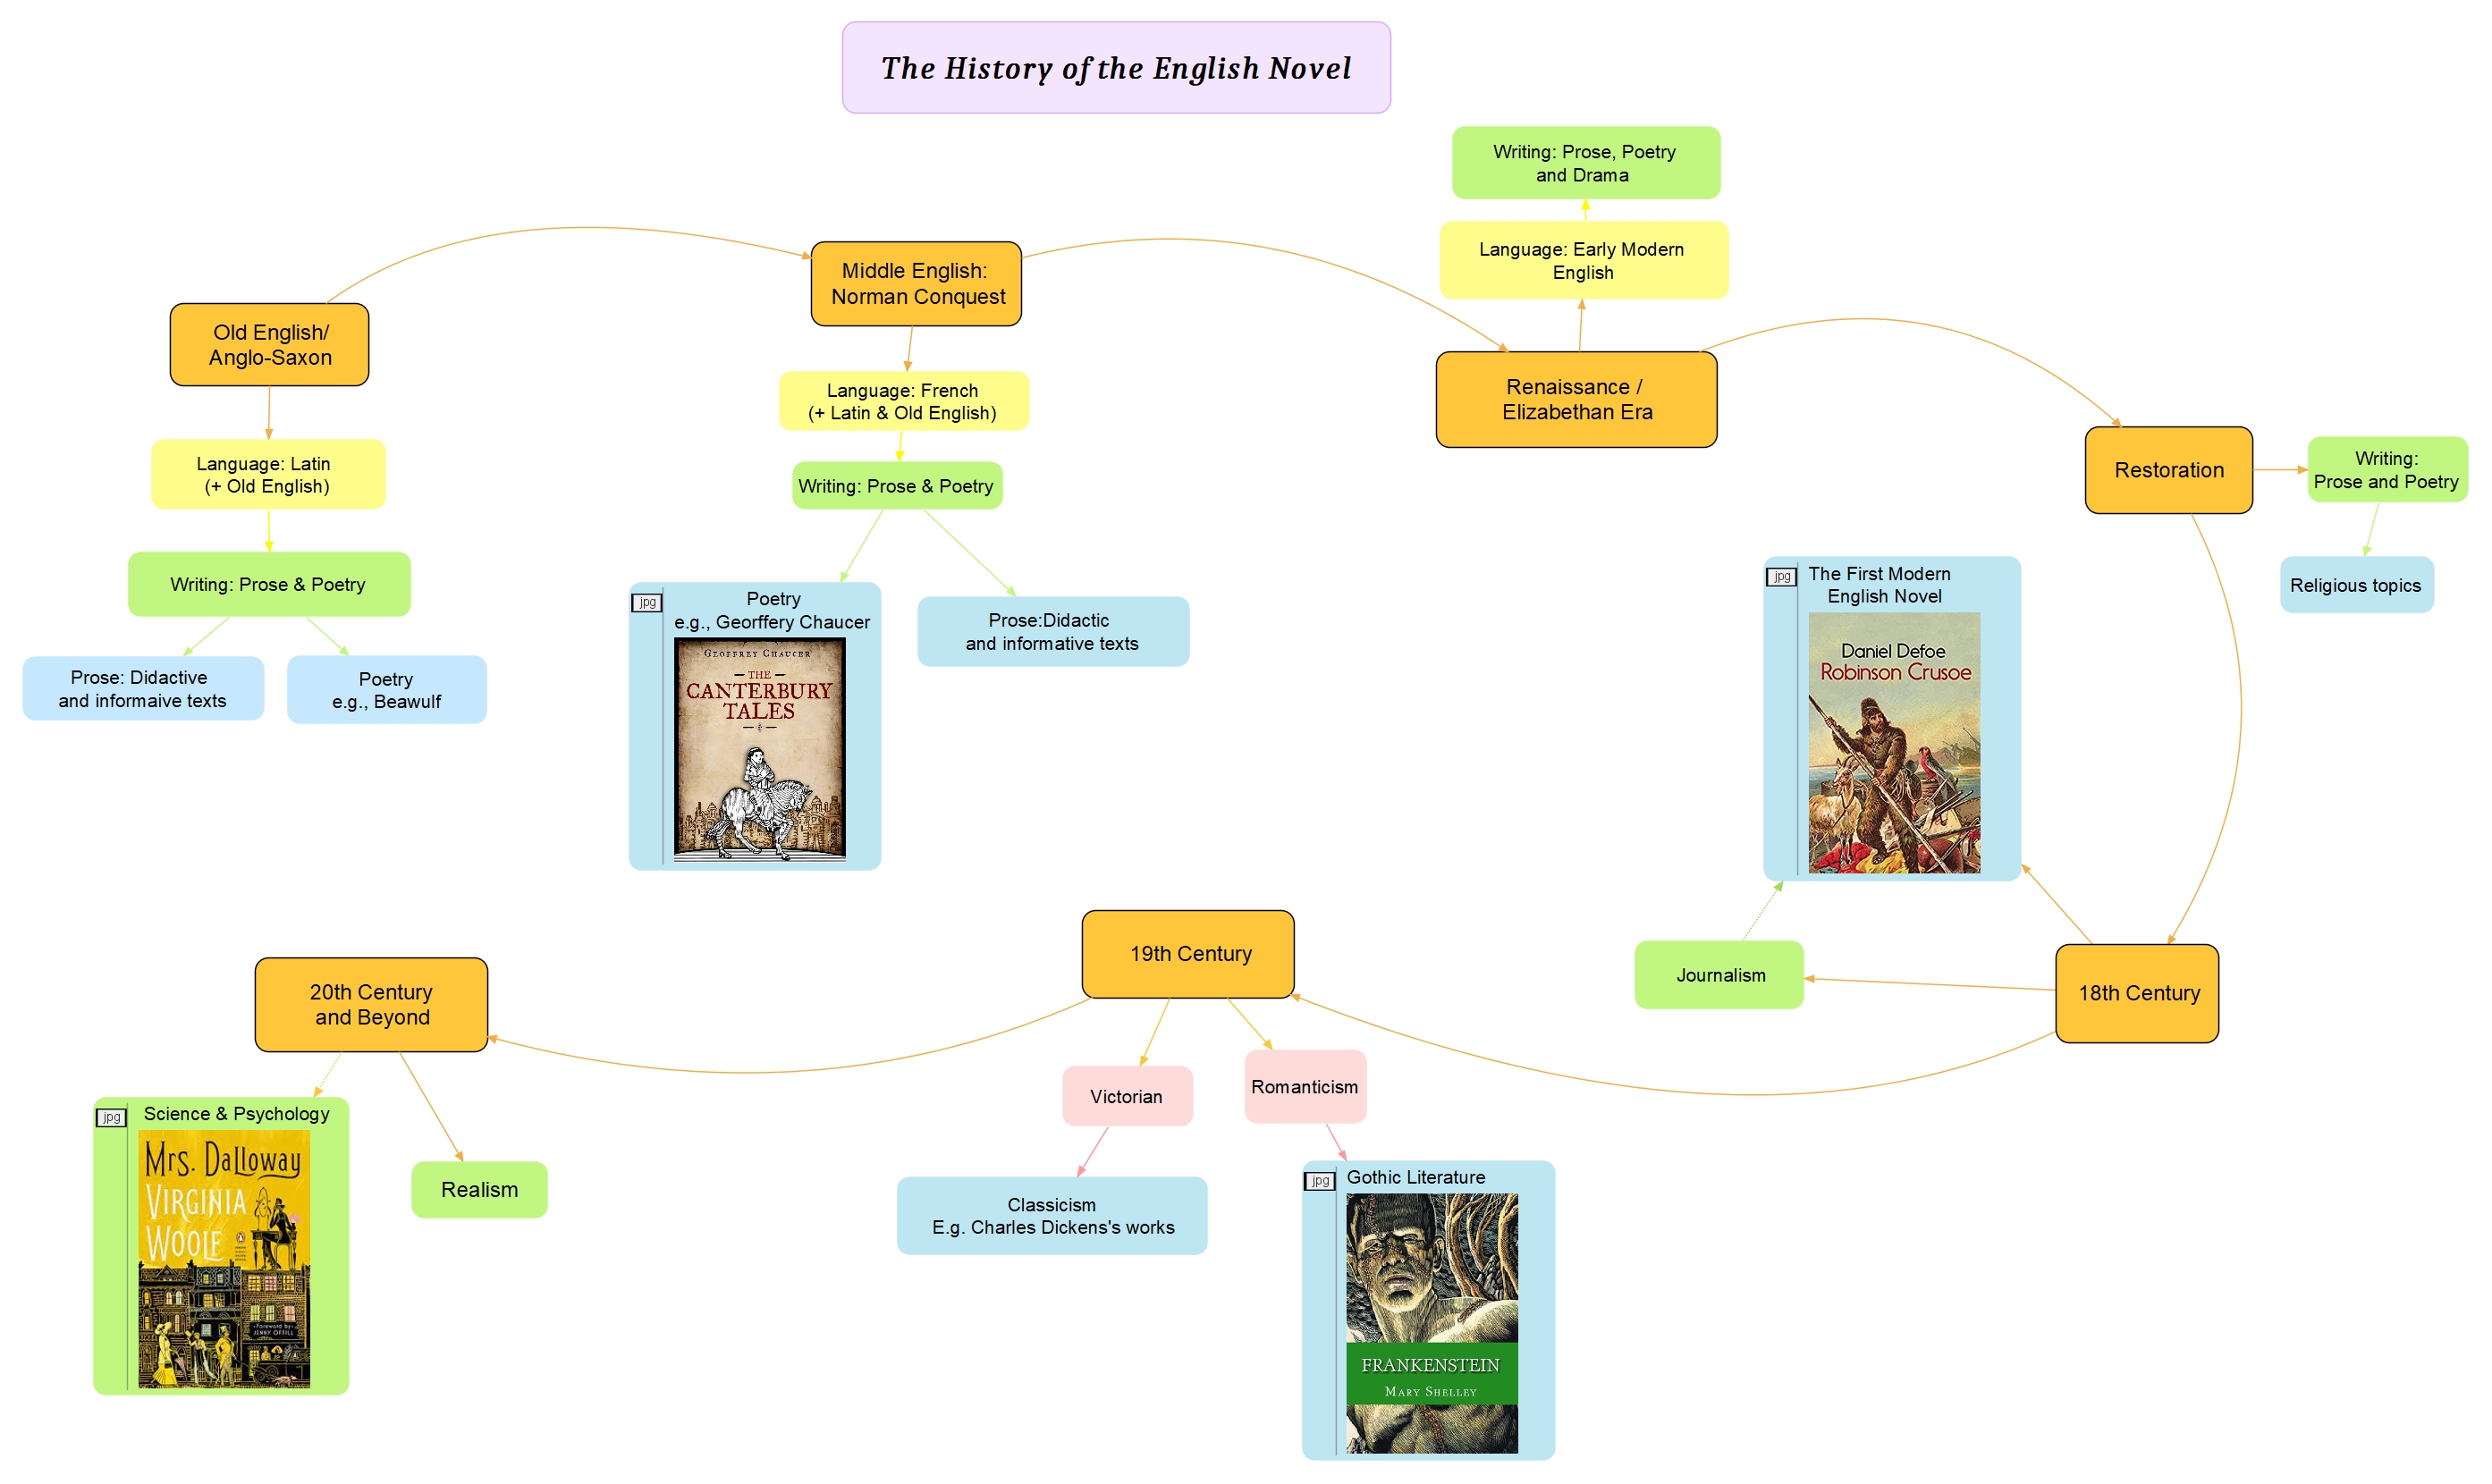 History of the English Novel